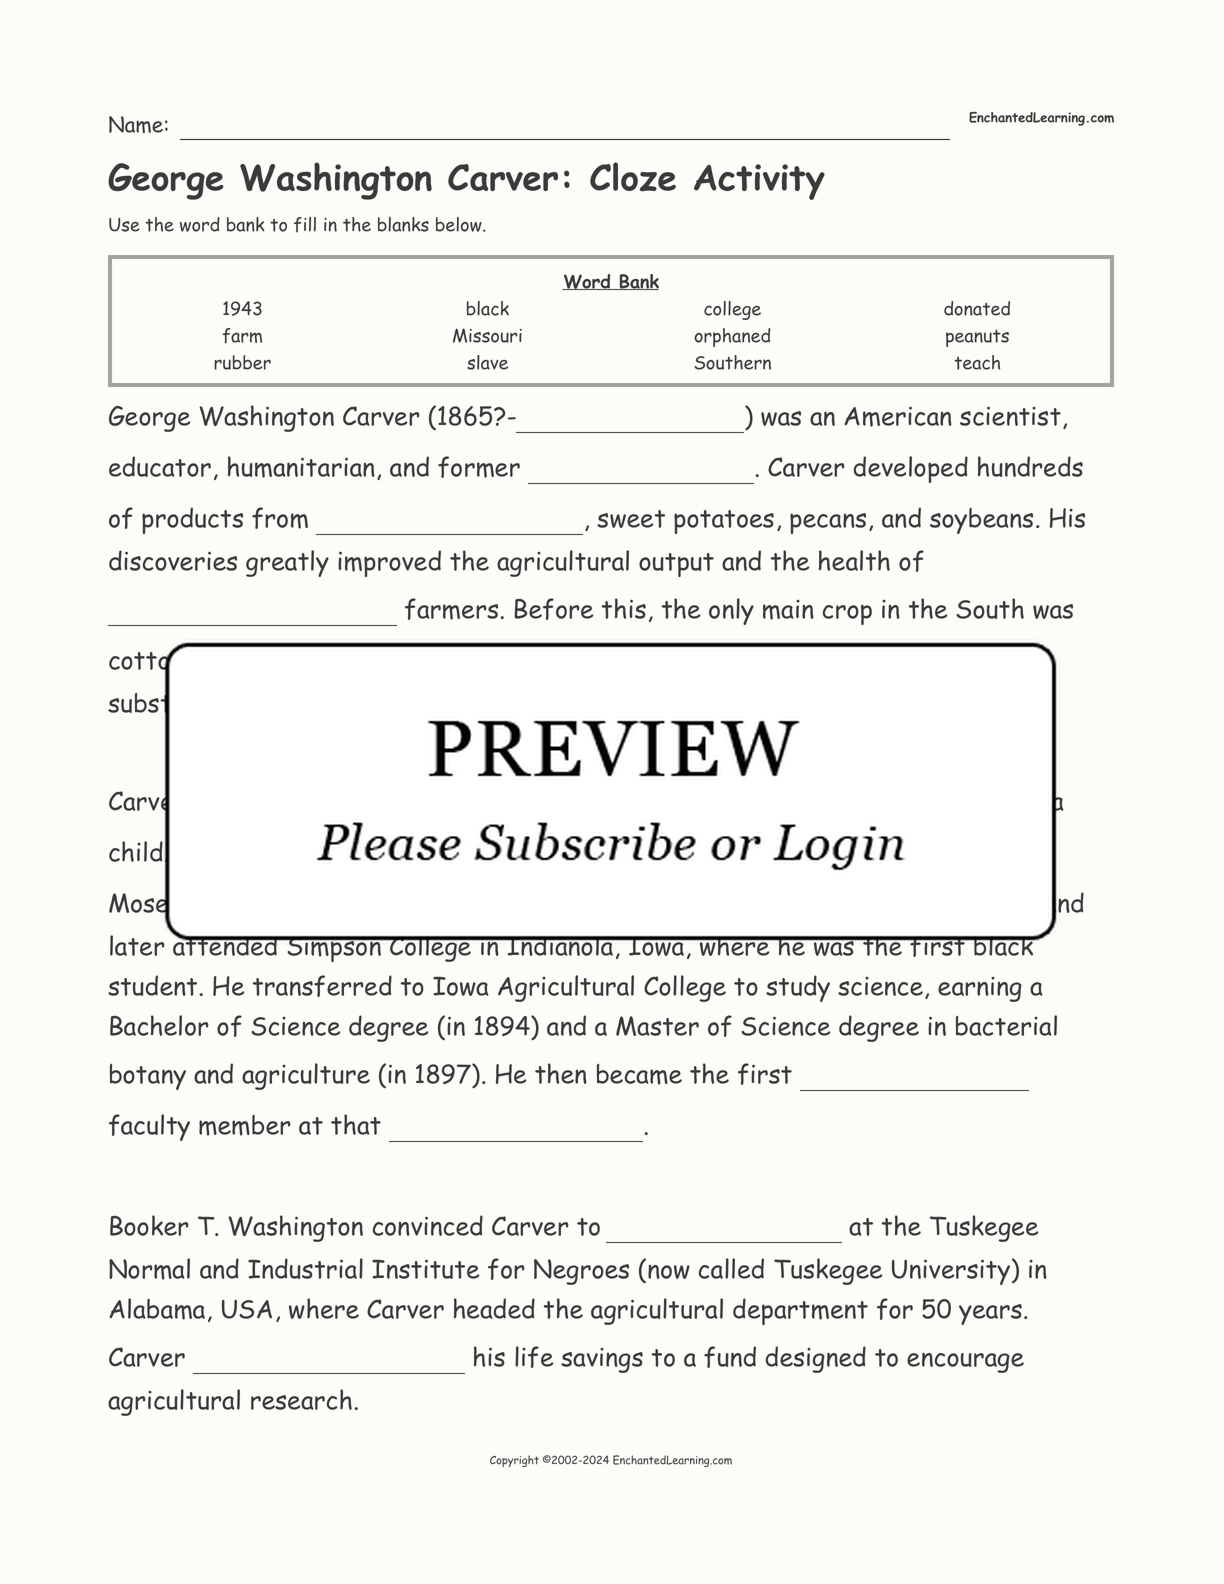 George Washington Carver: Cloze Activity interactive worksheet page 1